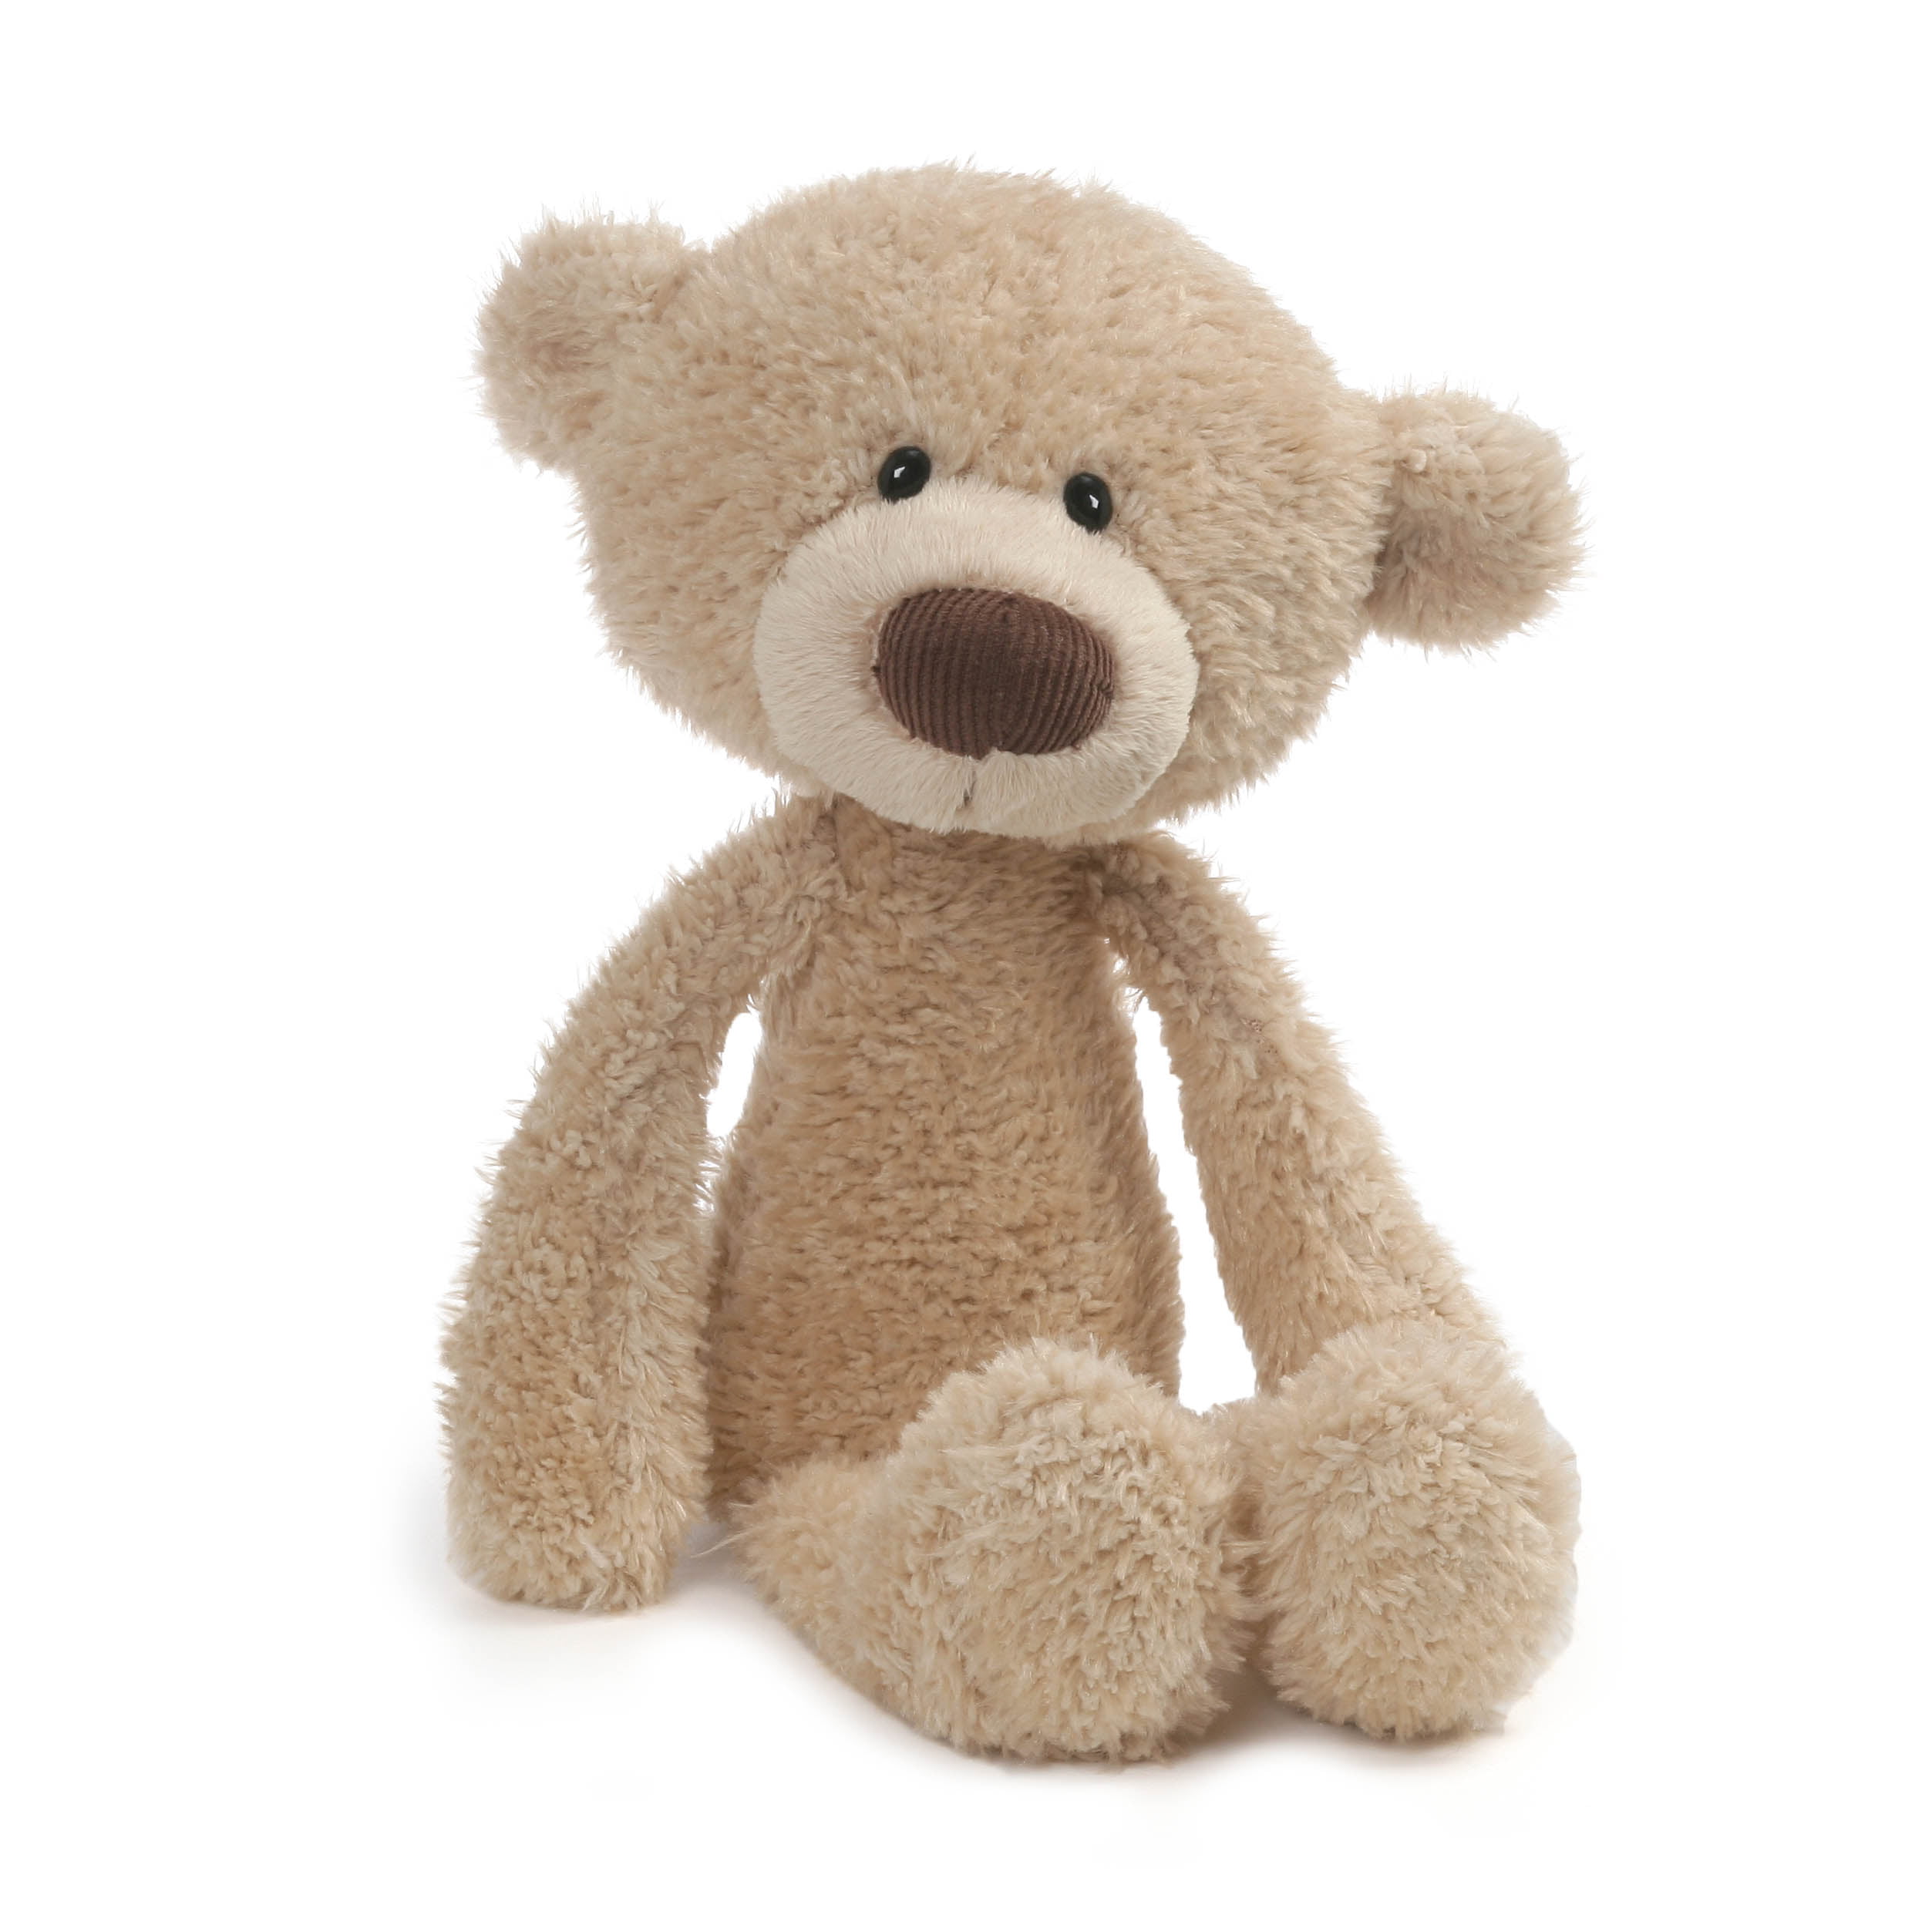 GUND 15" nwt Toothpick Teddy Bear Stuffed Animal Plush Beige light tan 